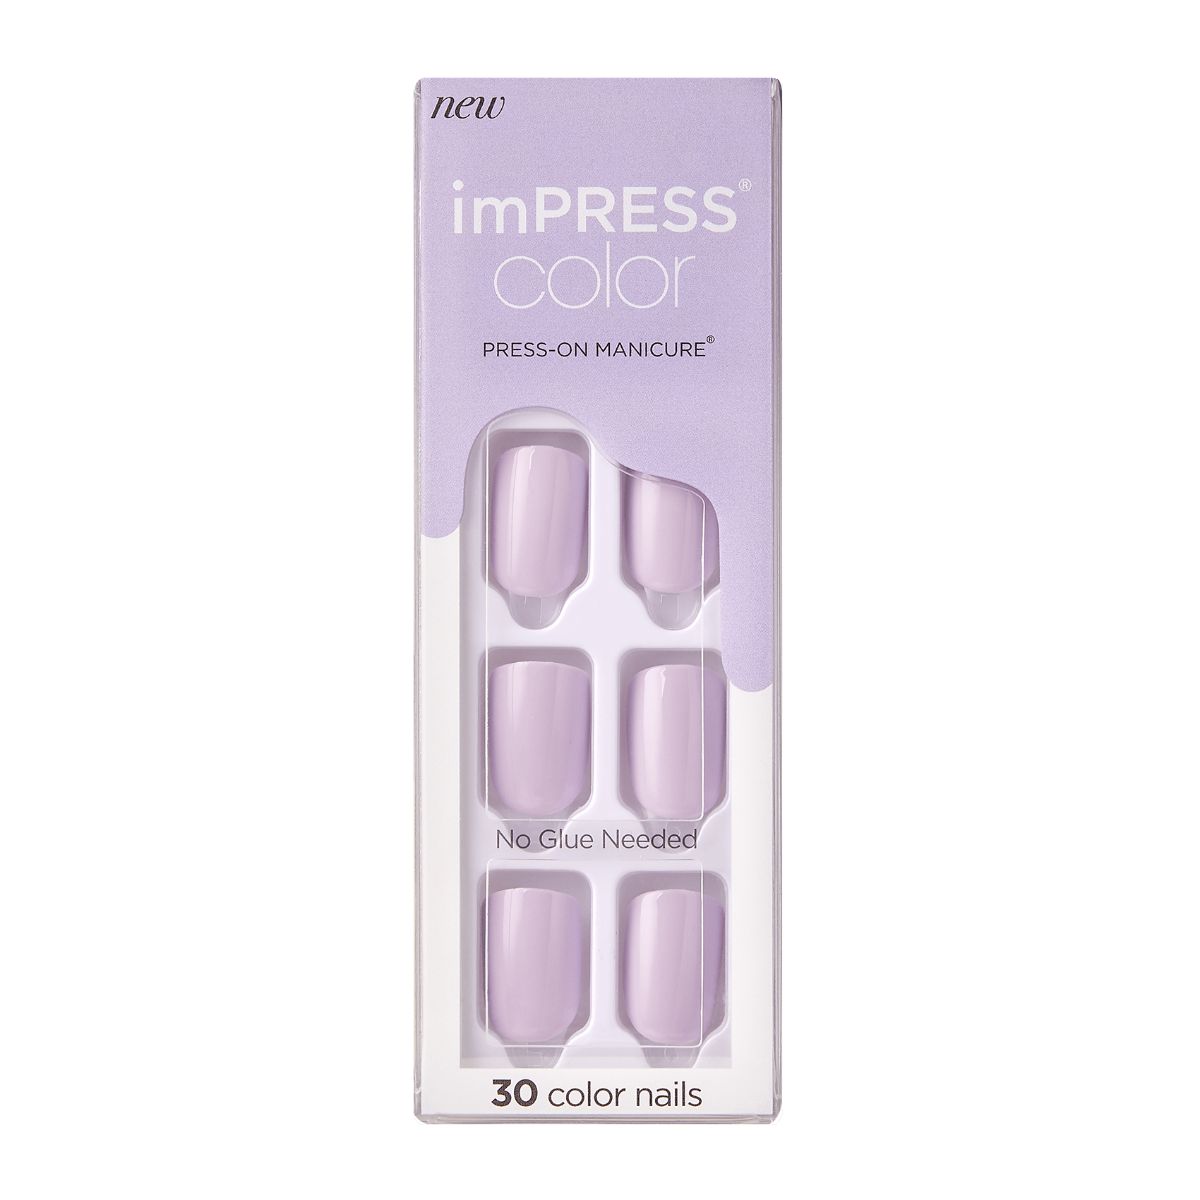 imPRESS Color Press-on Manicure - Picture Purplect | KISS, imPRESS, JOAH